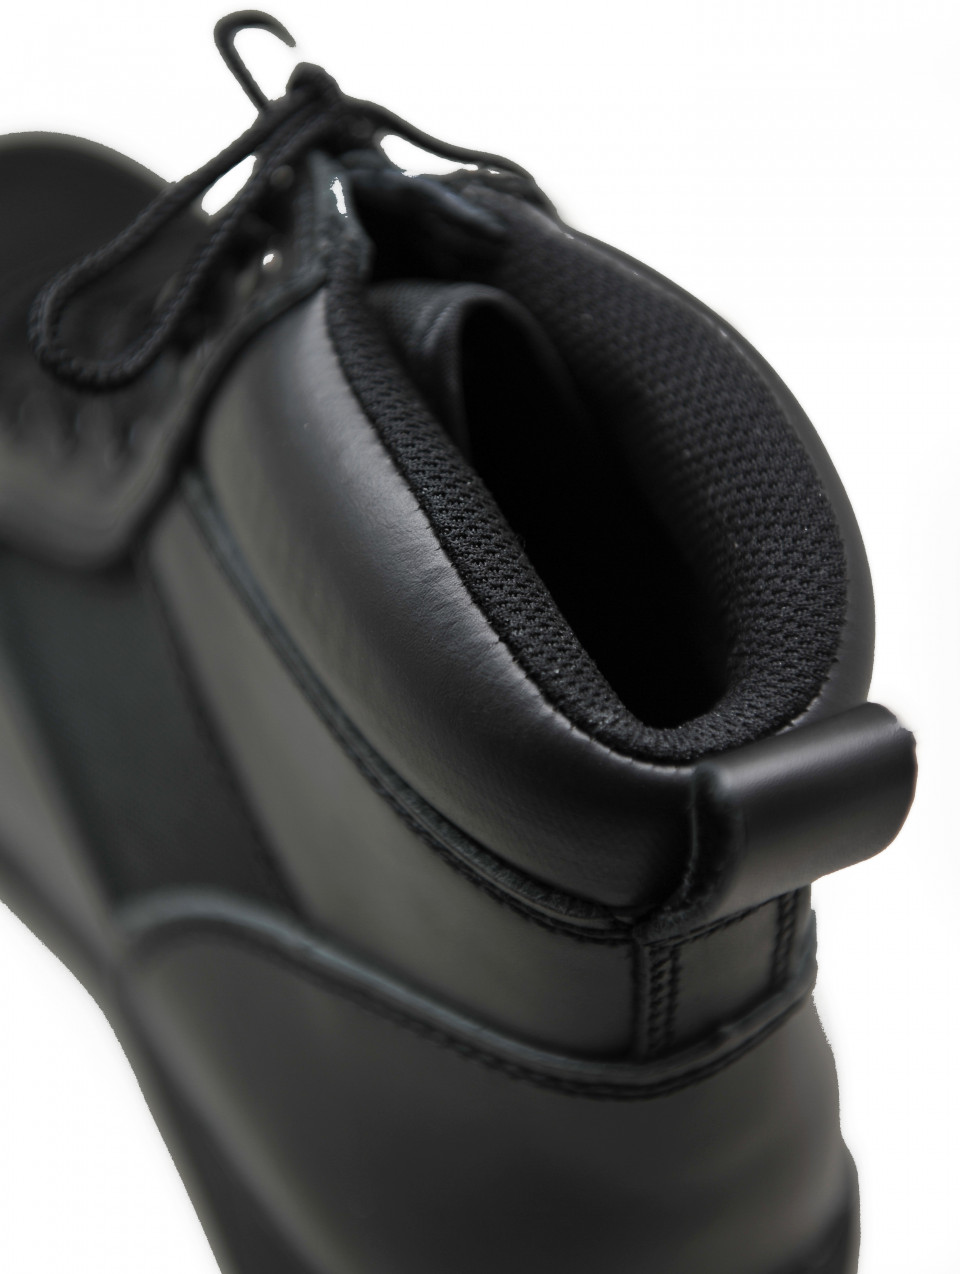 Premier 5-Star Anti-Slip Occupational Boots